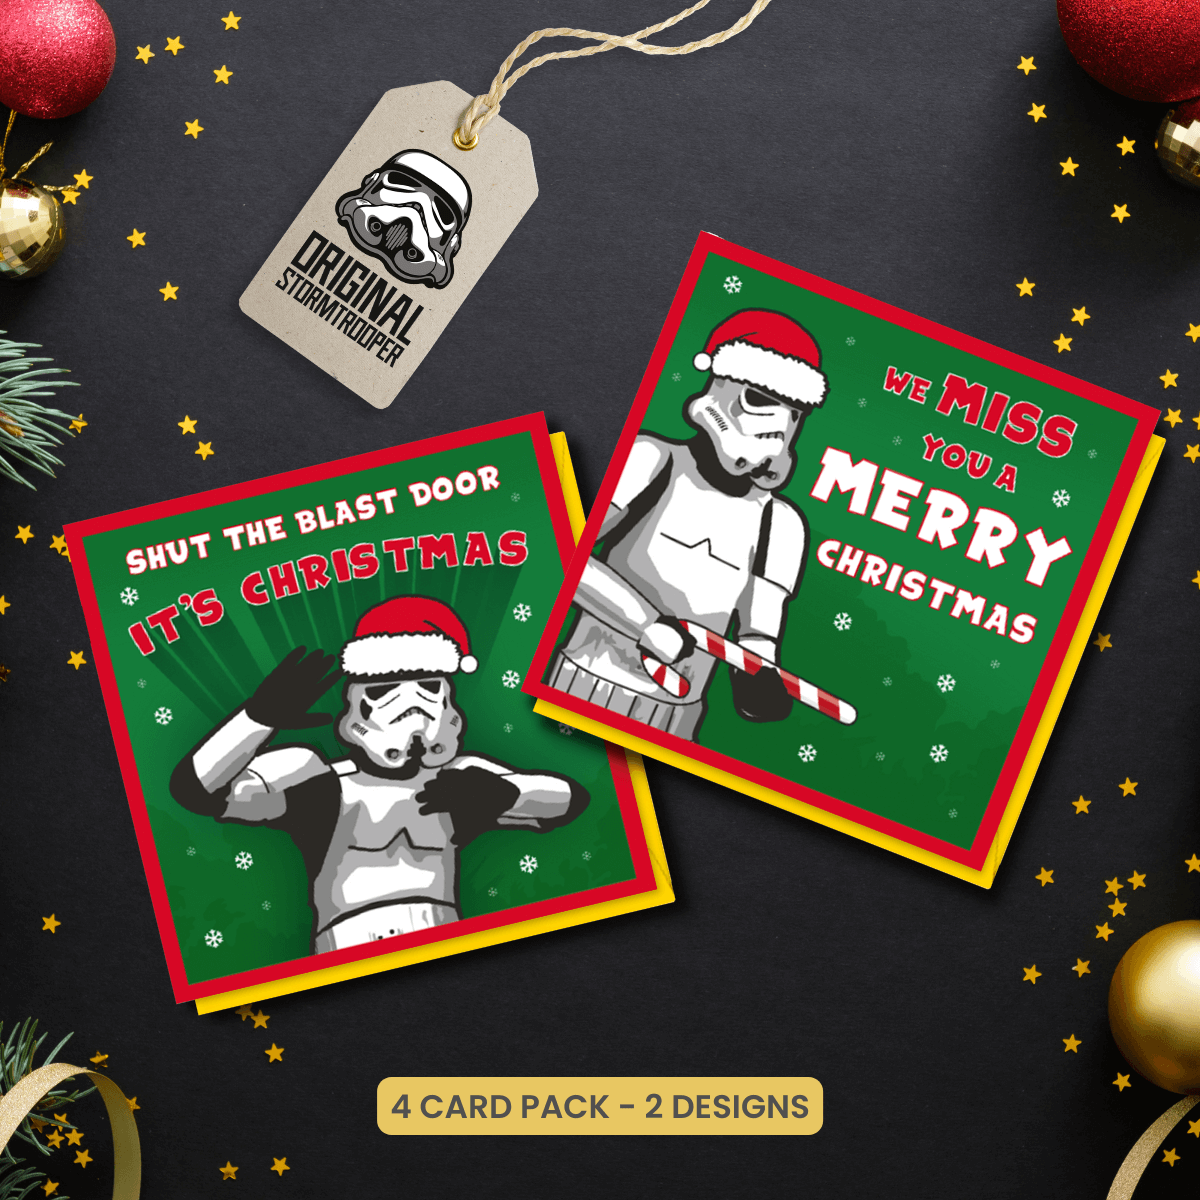 Original Stormtrooper Christmas Cards Pack of 4 - Stormtrooper Cards For Christmas